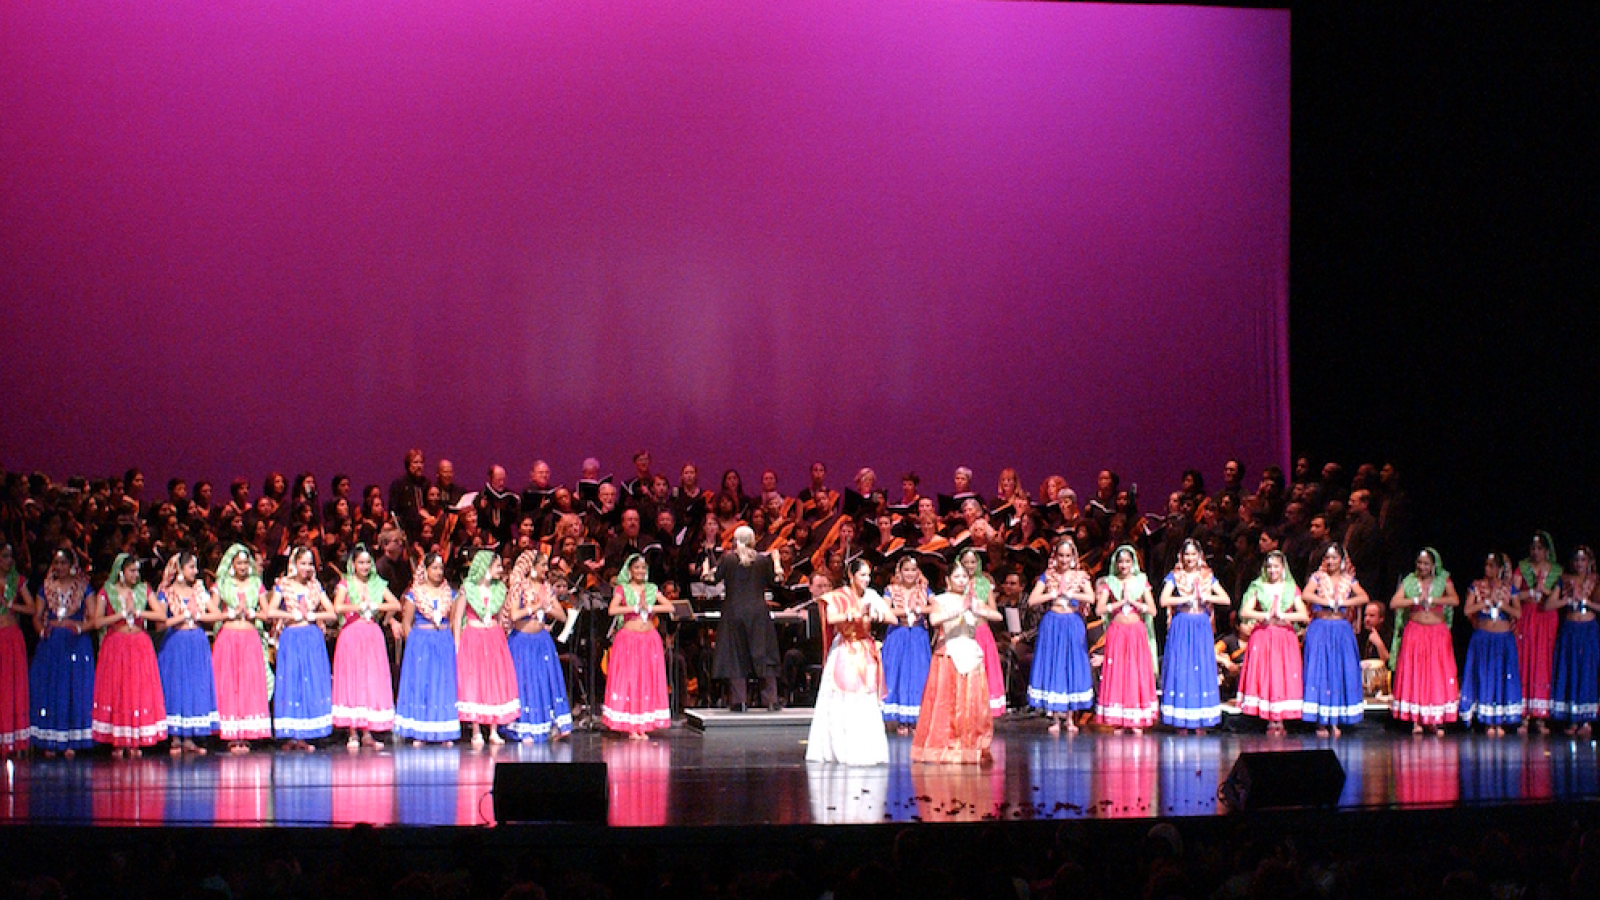 Choral singers and dancers onstage